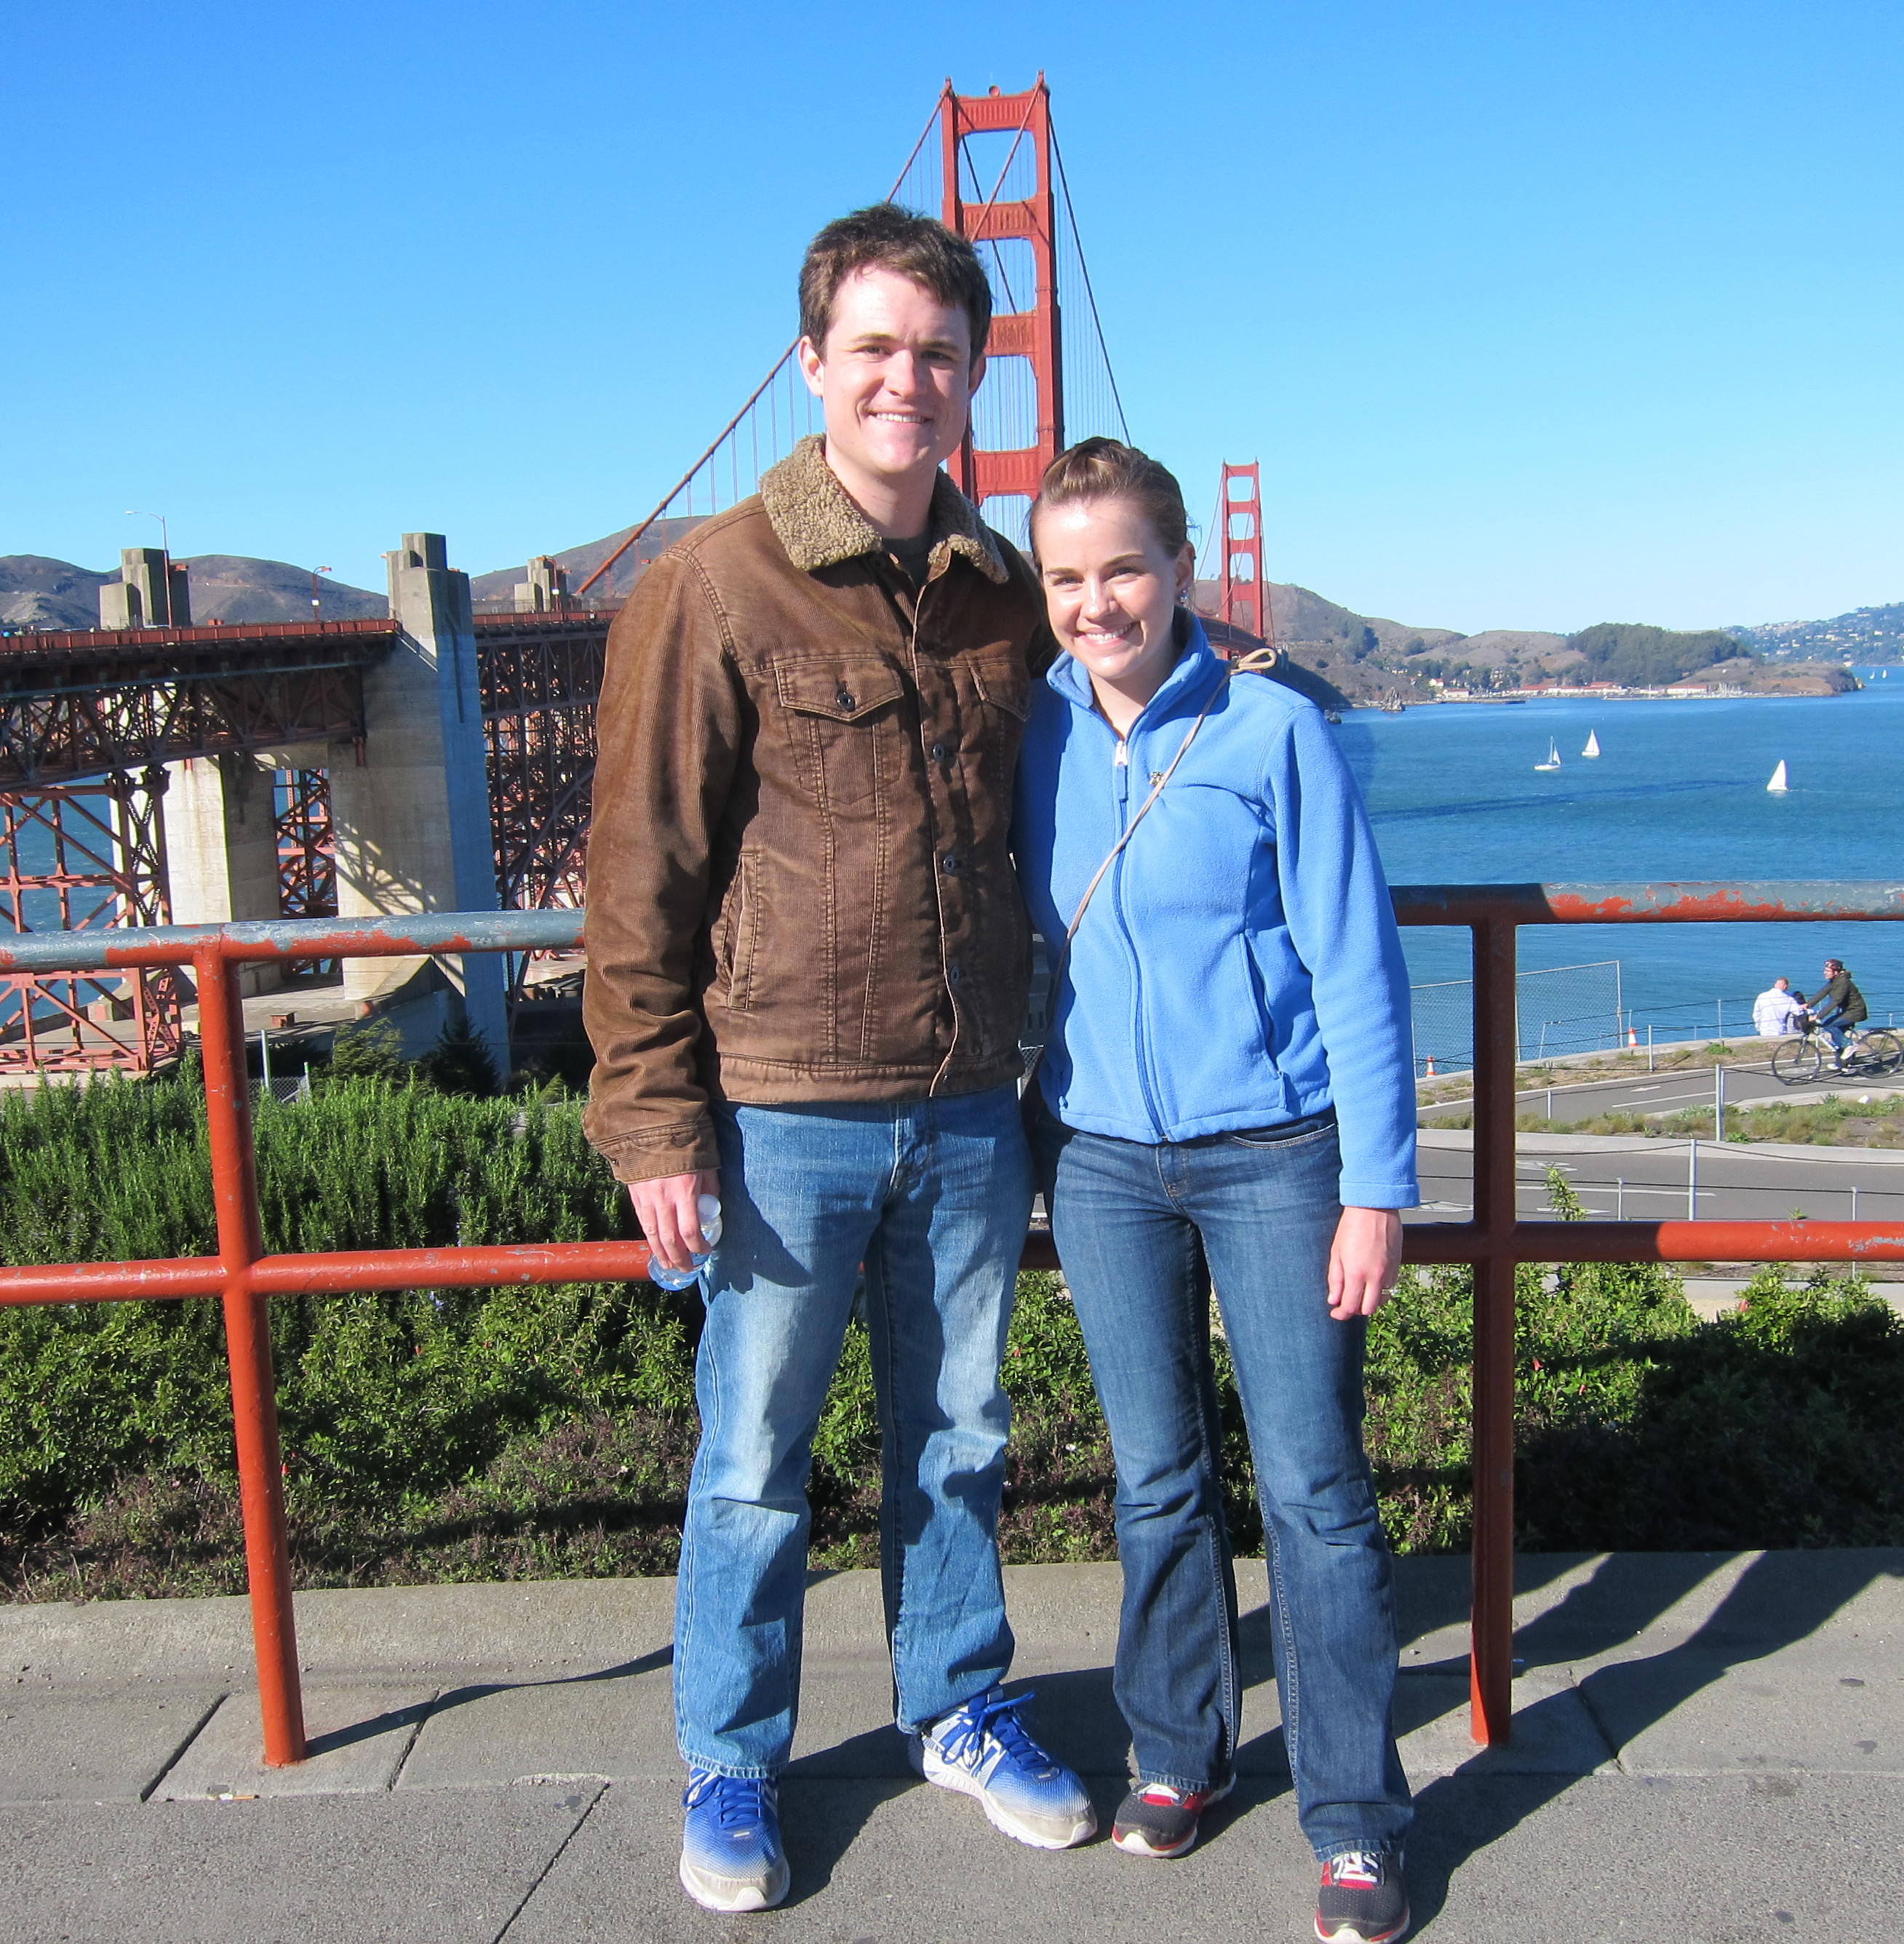 San Francisco Trip Report Update (9/10/15) | Where Did I Leave My Heart?